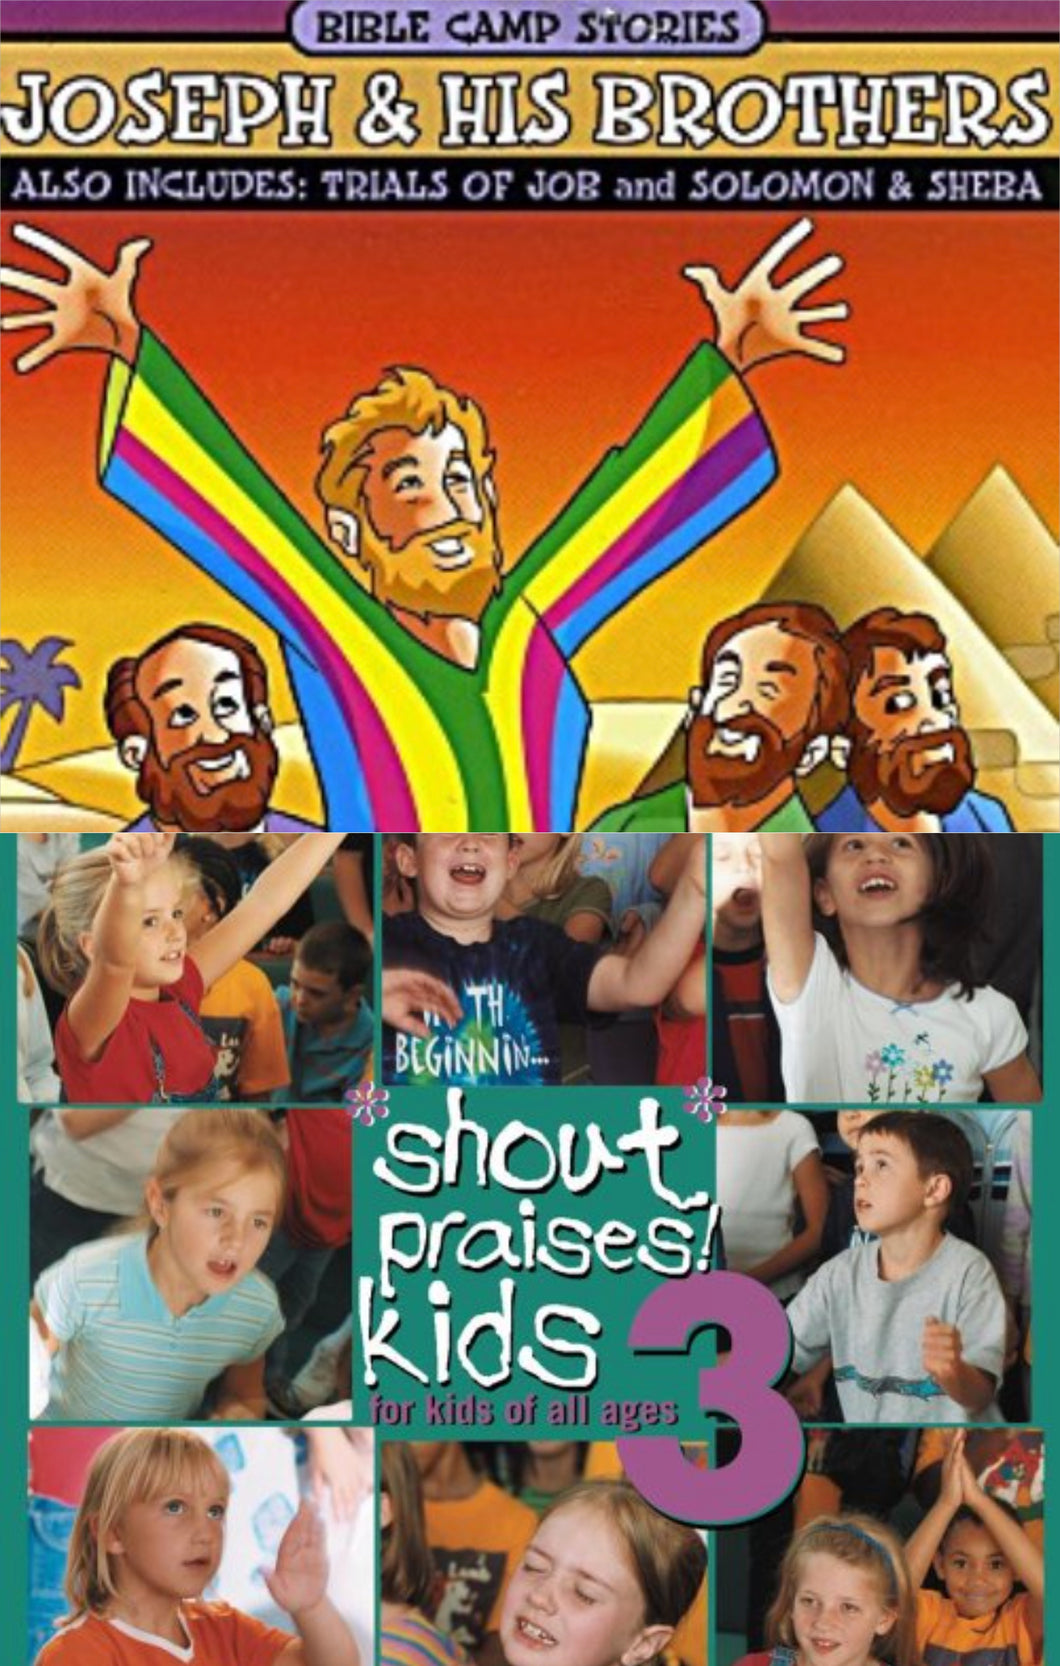 Bible Camp Stories : Joseph & His Brothers + Shout Praises Kids v.3 2CD